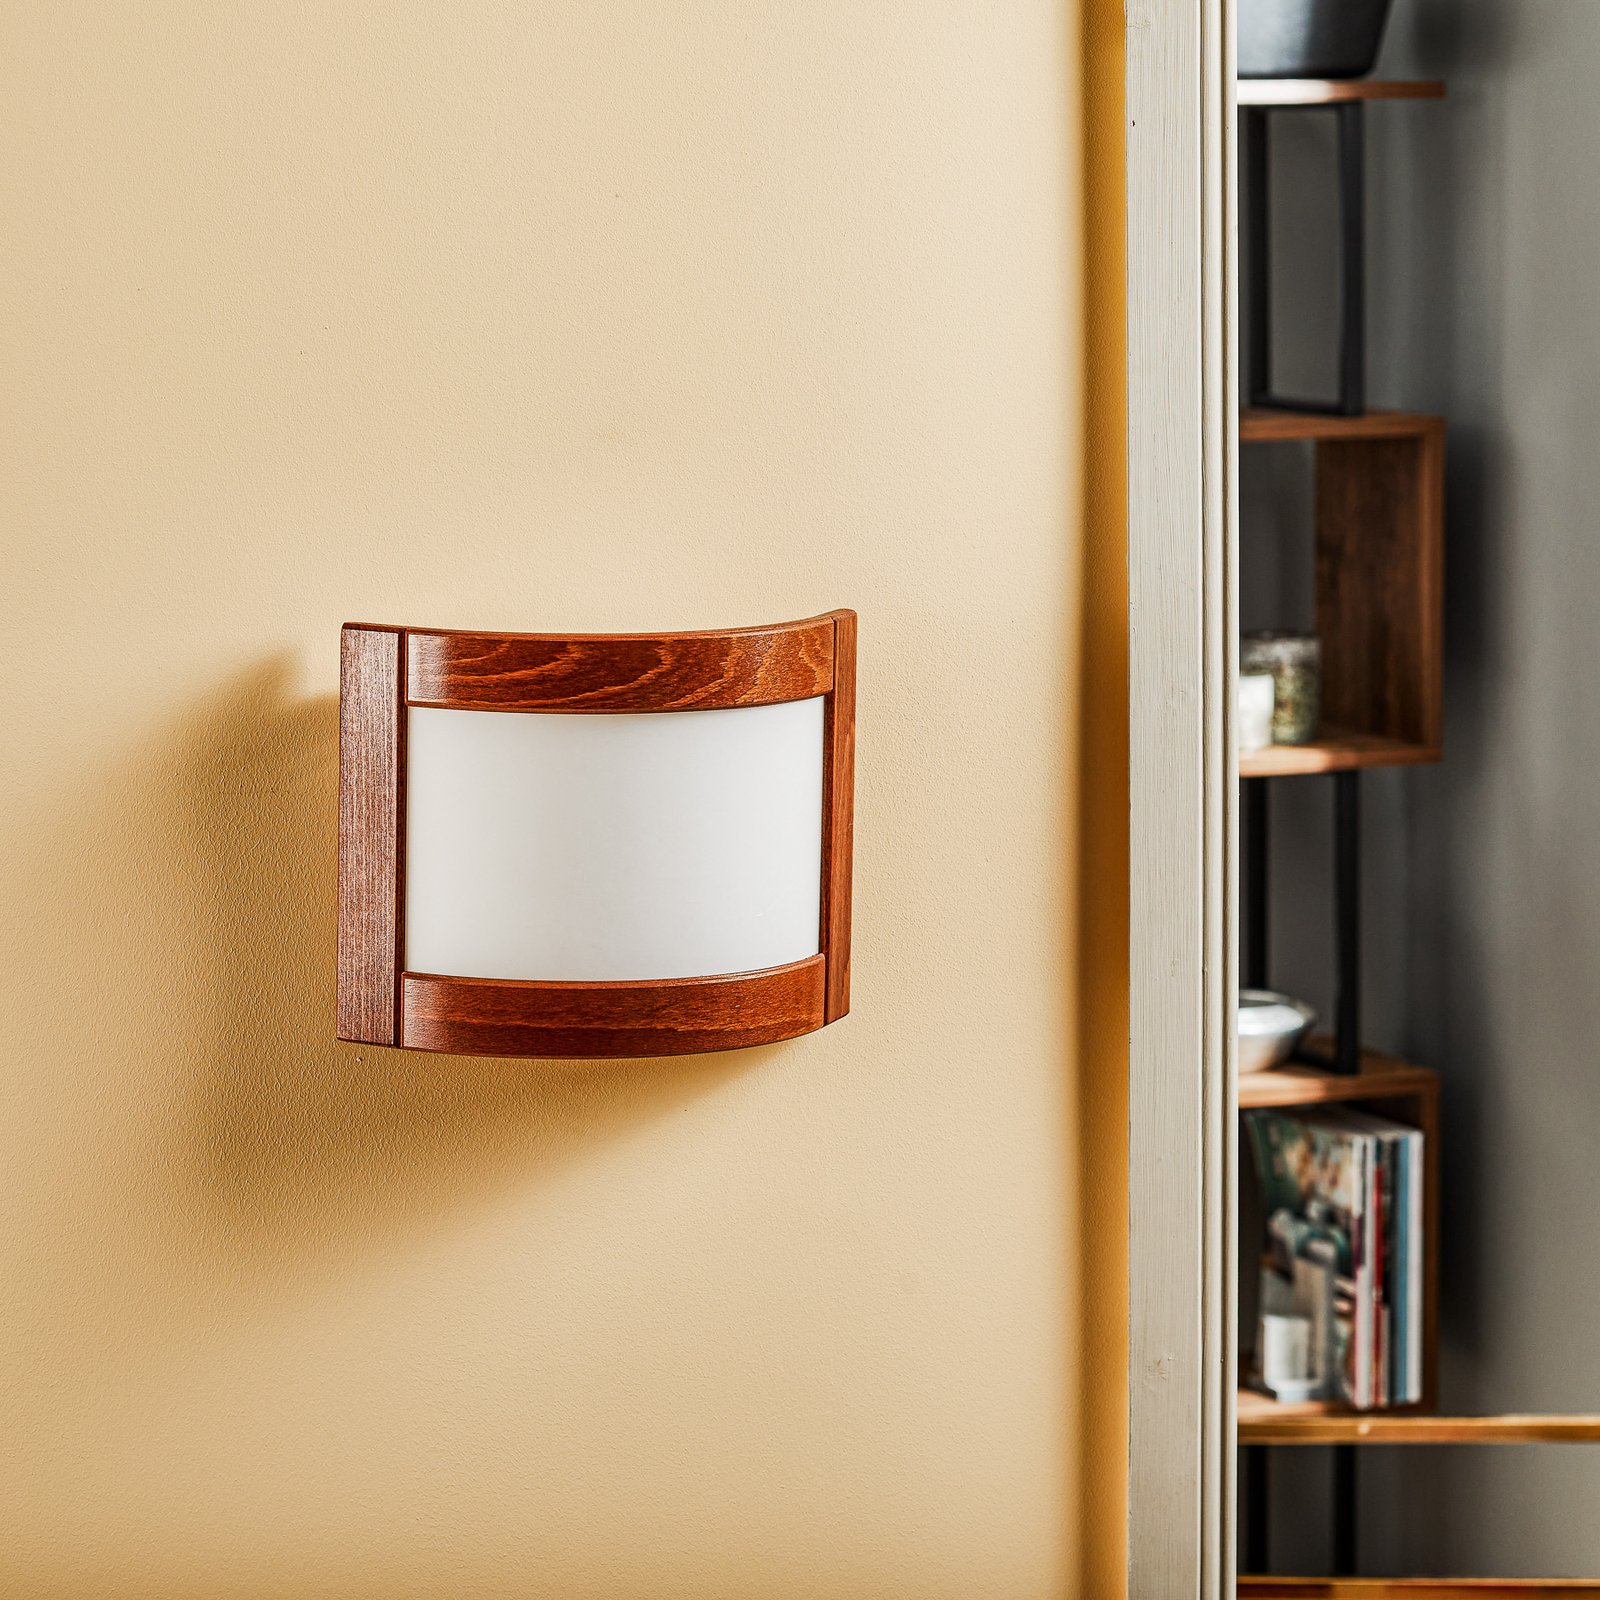 Zanna wall light made of wood, 22 cm high, rustic